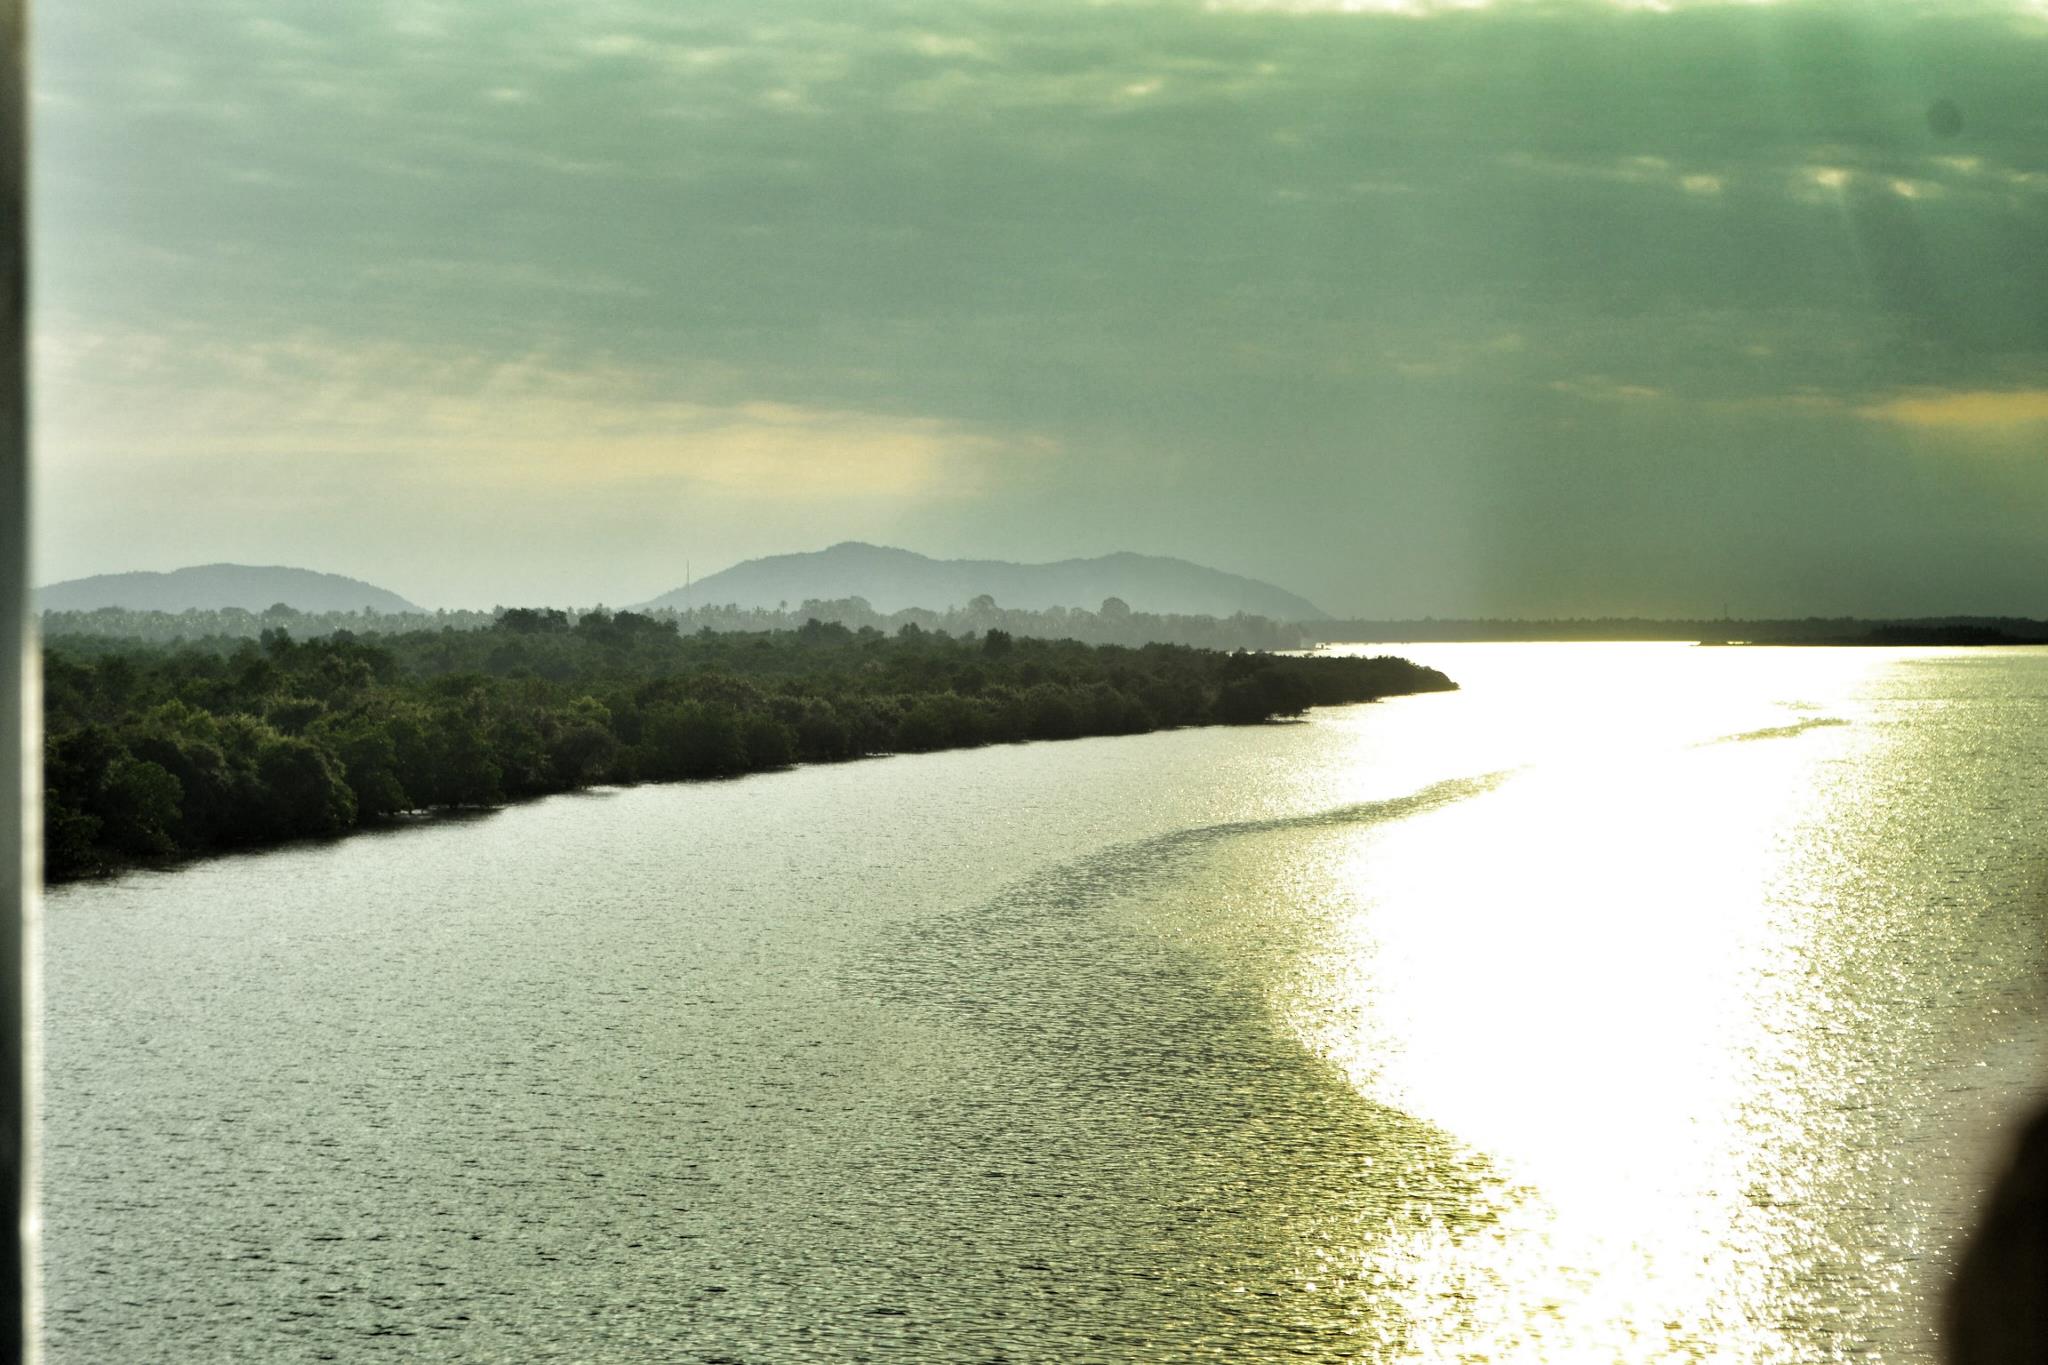 Where the Arabian Sea meets the Talpona River in Goa